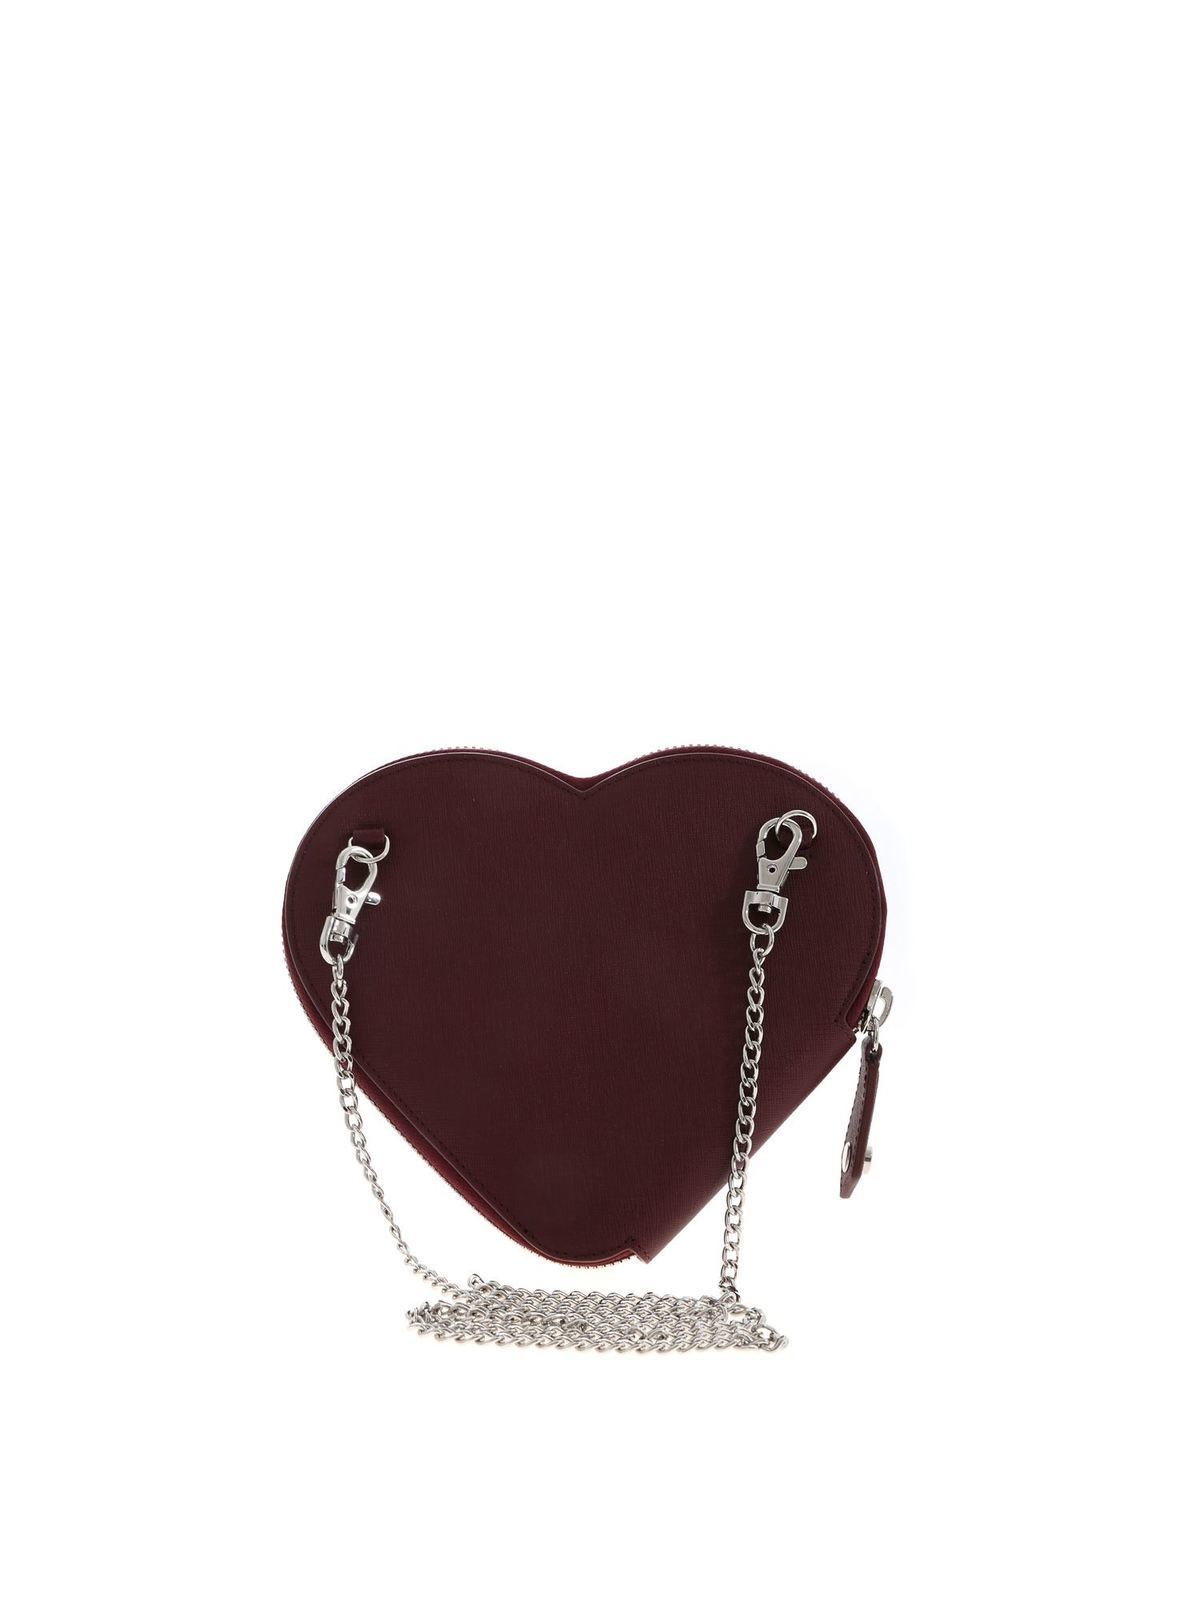 Vivienne Westwood Heart Shaped Bag